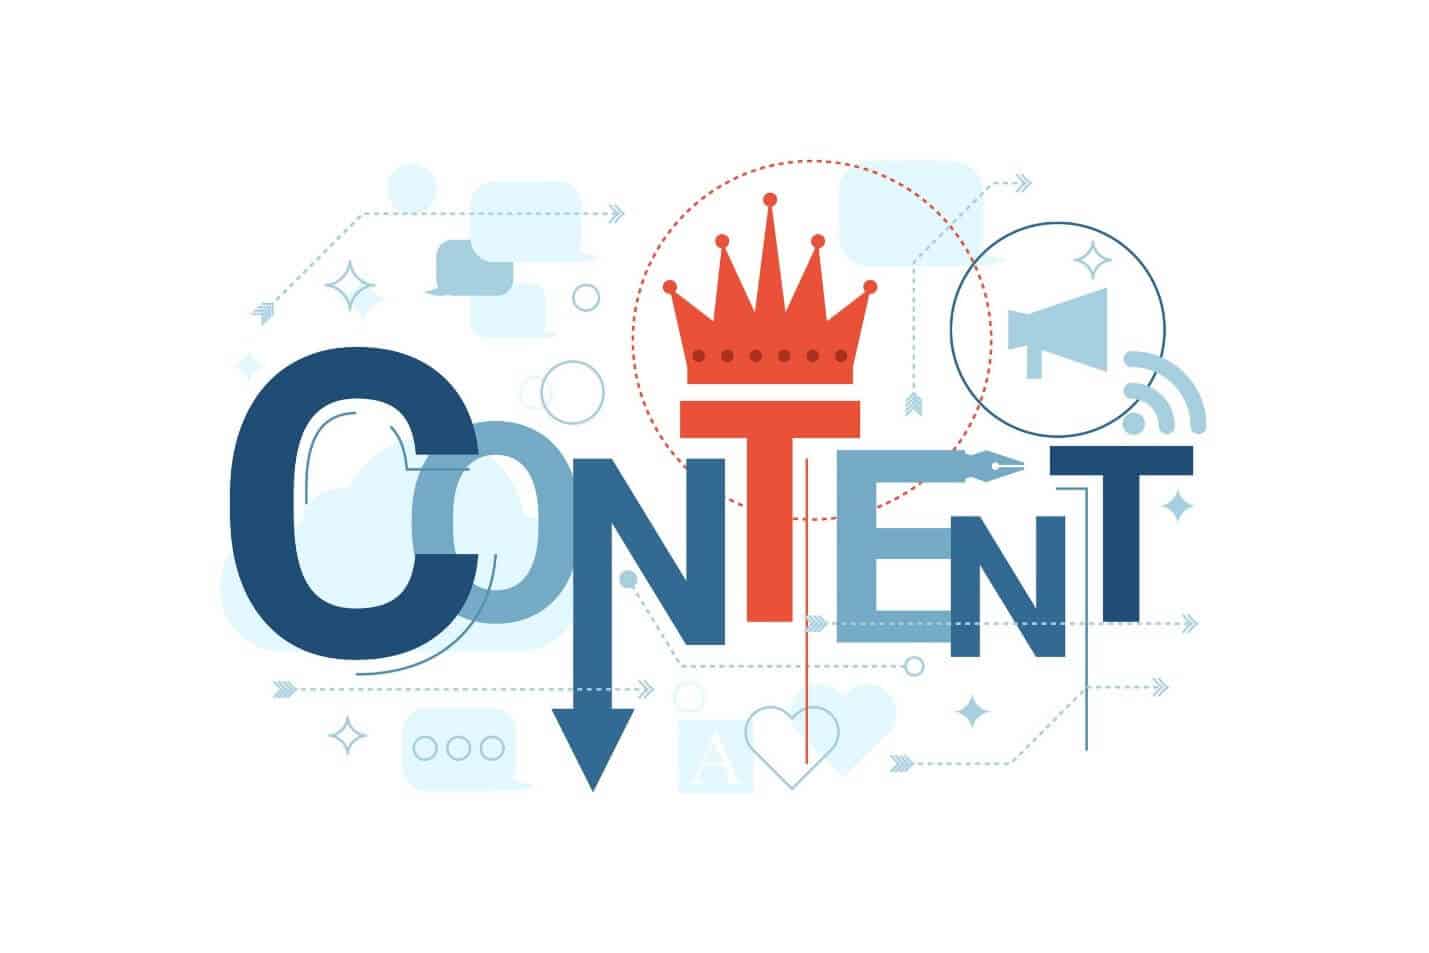 Website Content is King